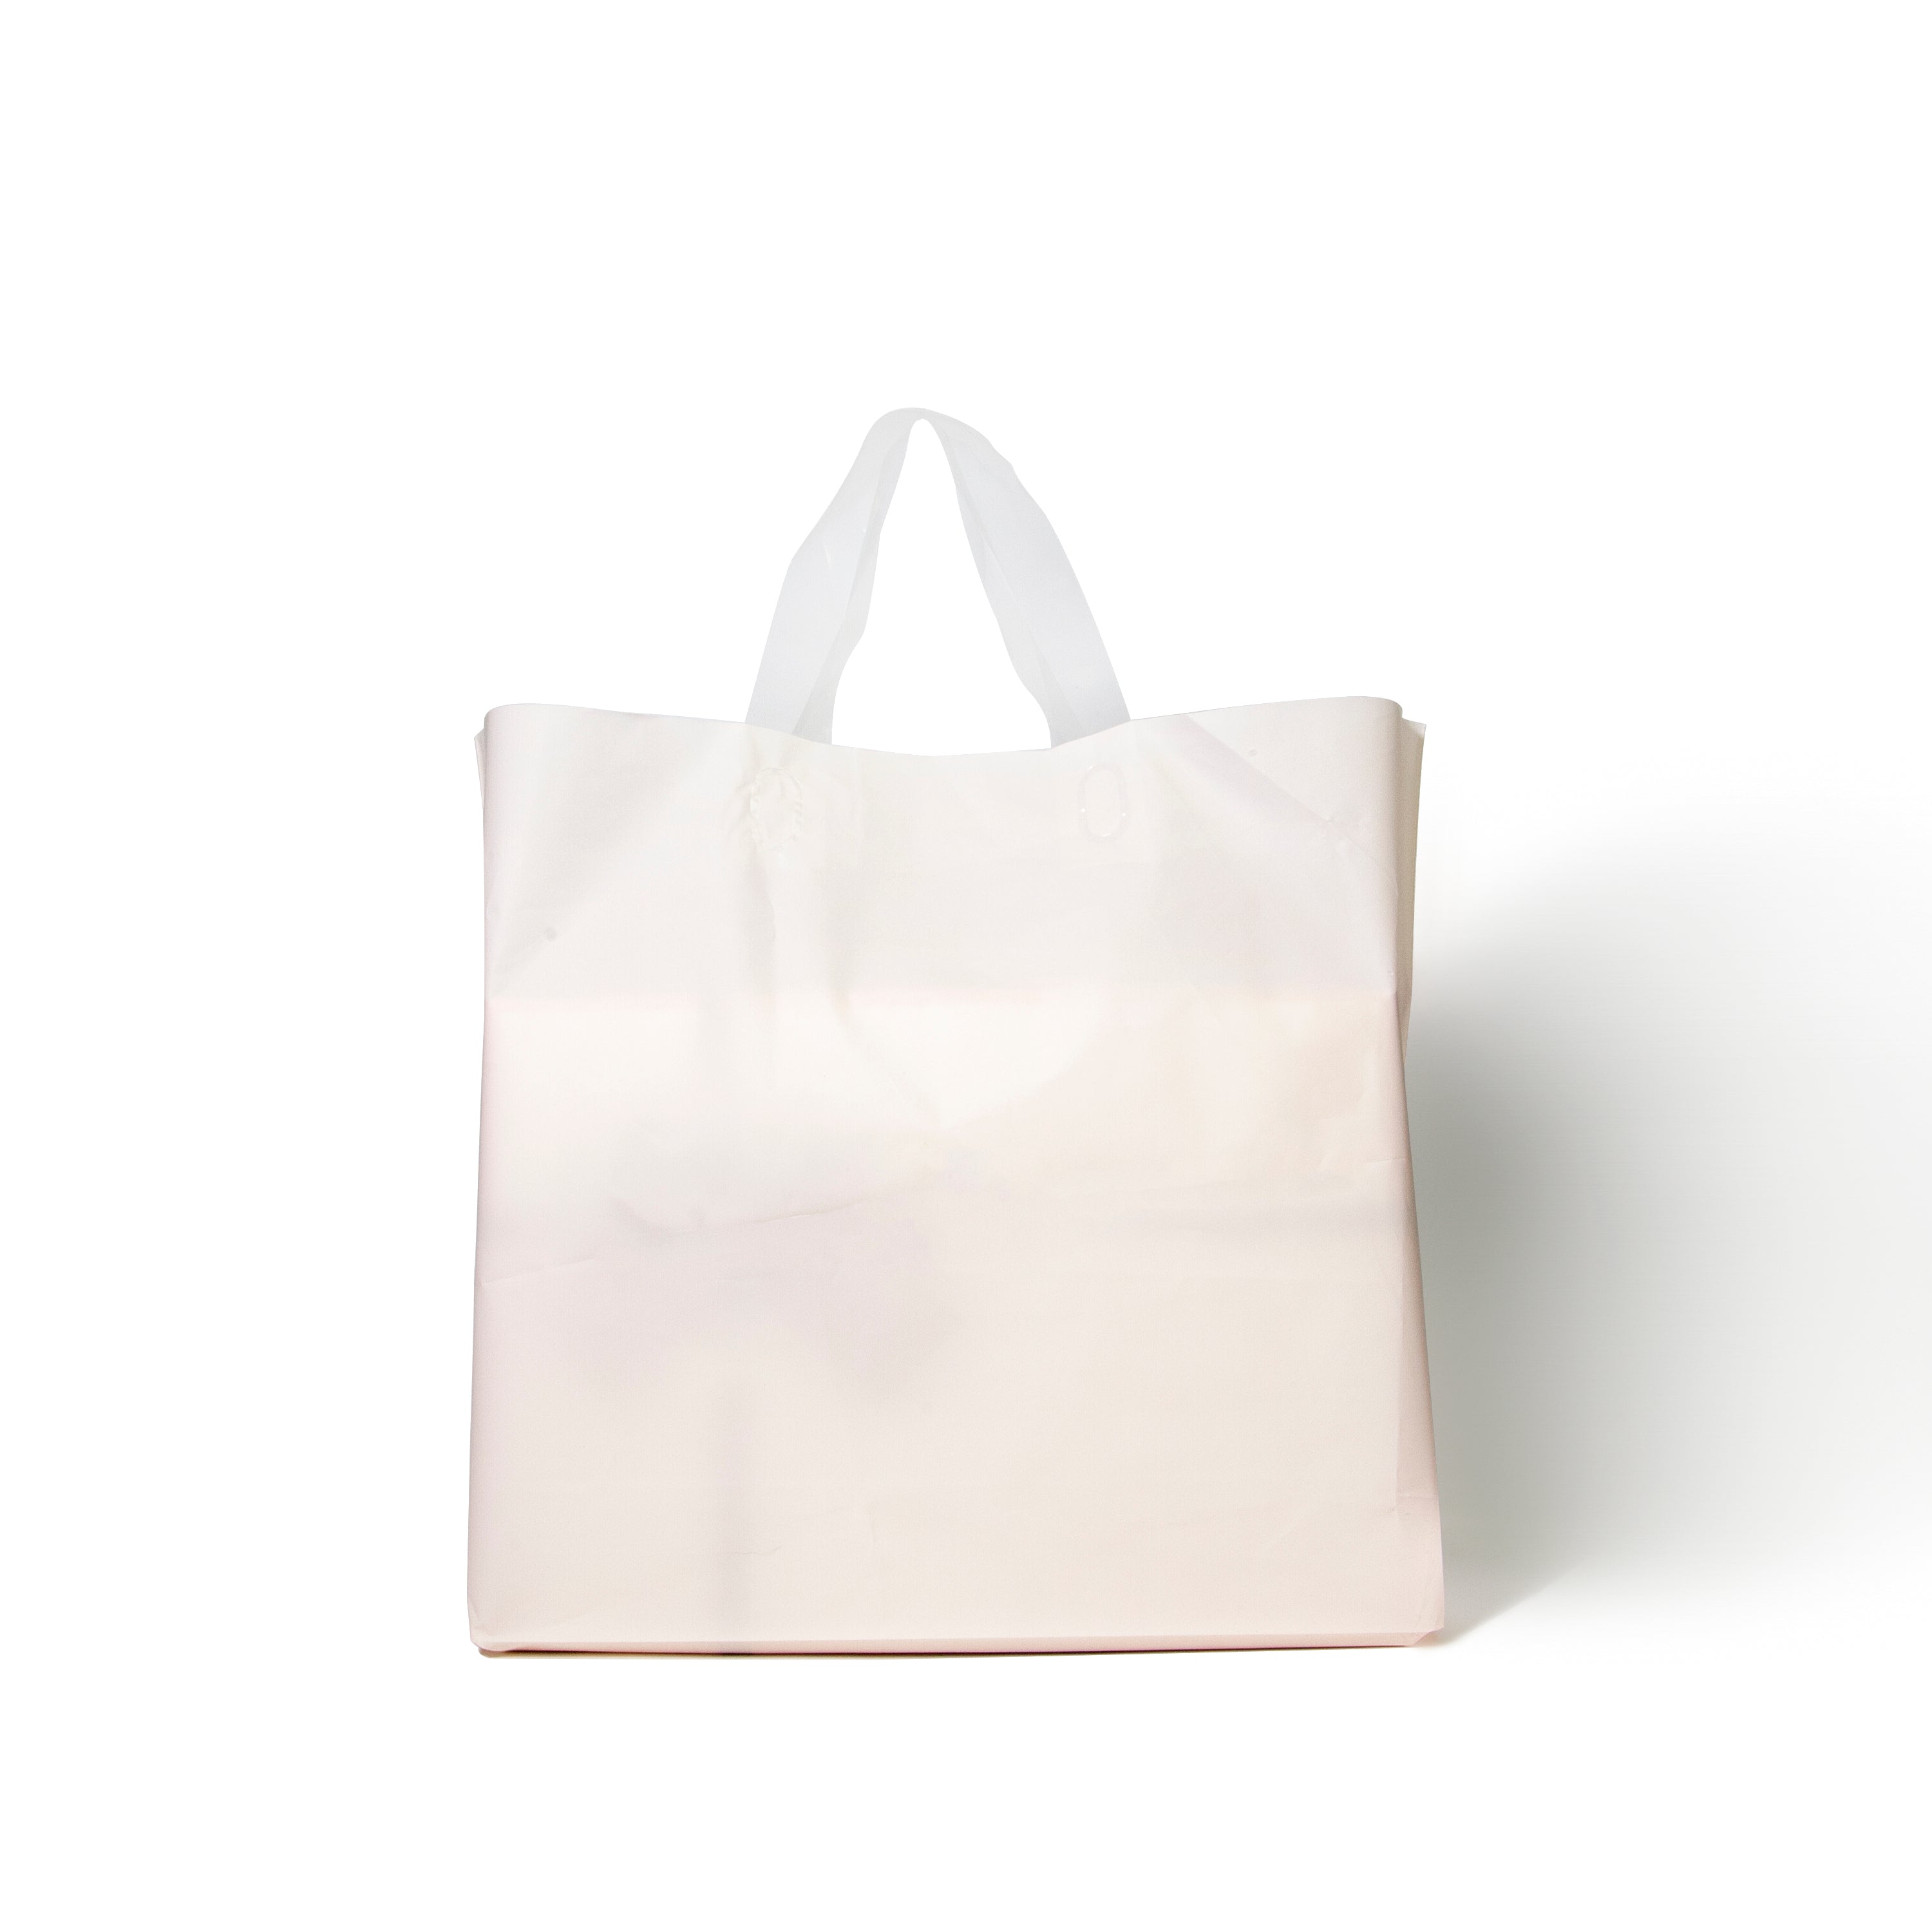 Matte Chlorinated Polyethylene Shopping Bags